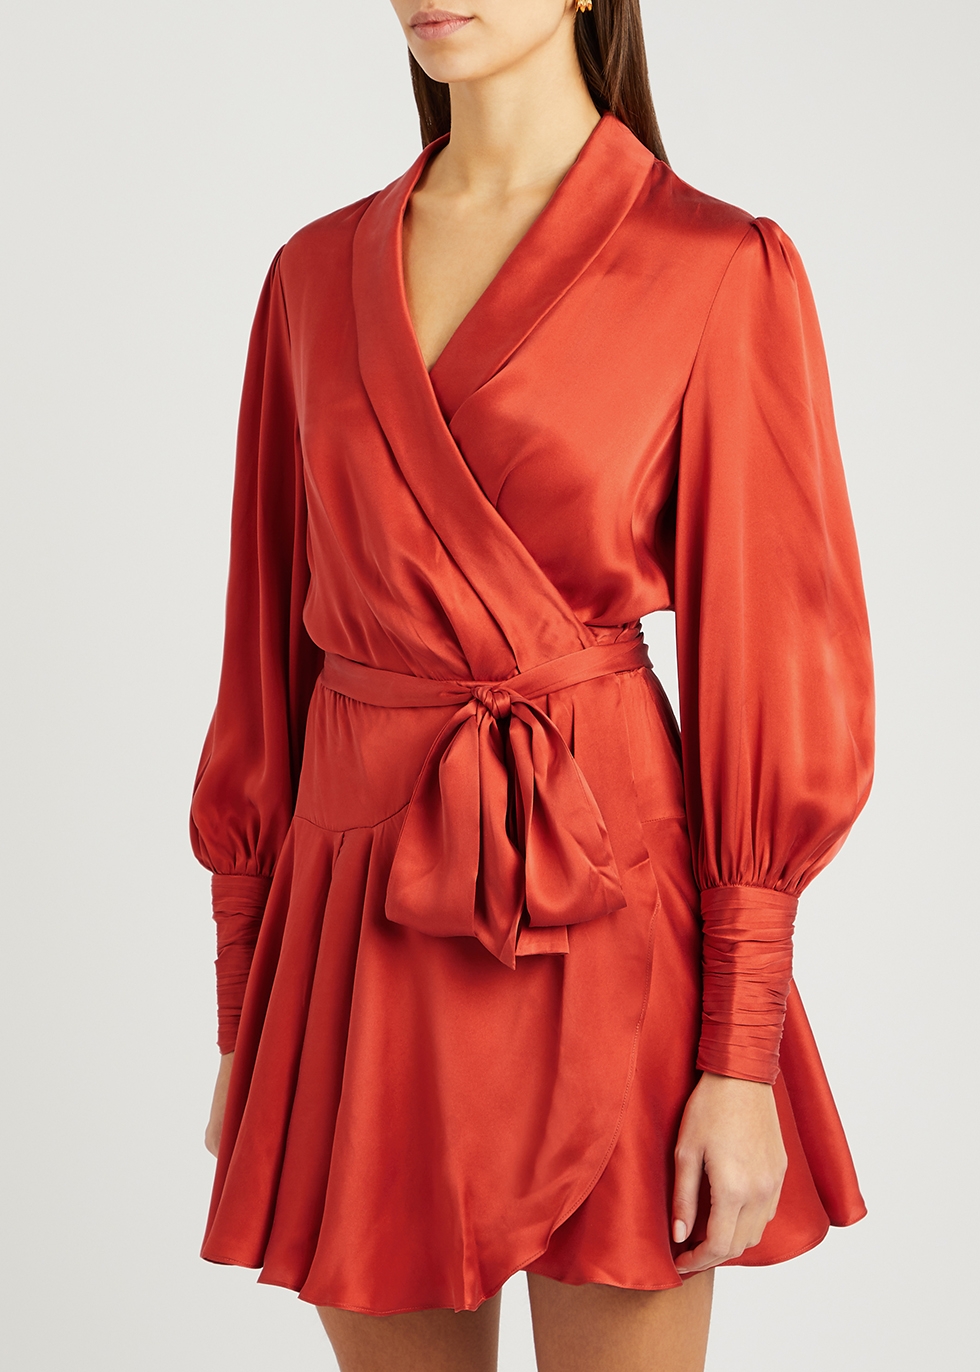 Zimmermann Red silk wrap dress - Harvey Nichols